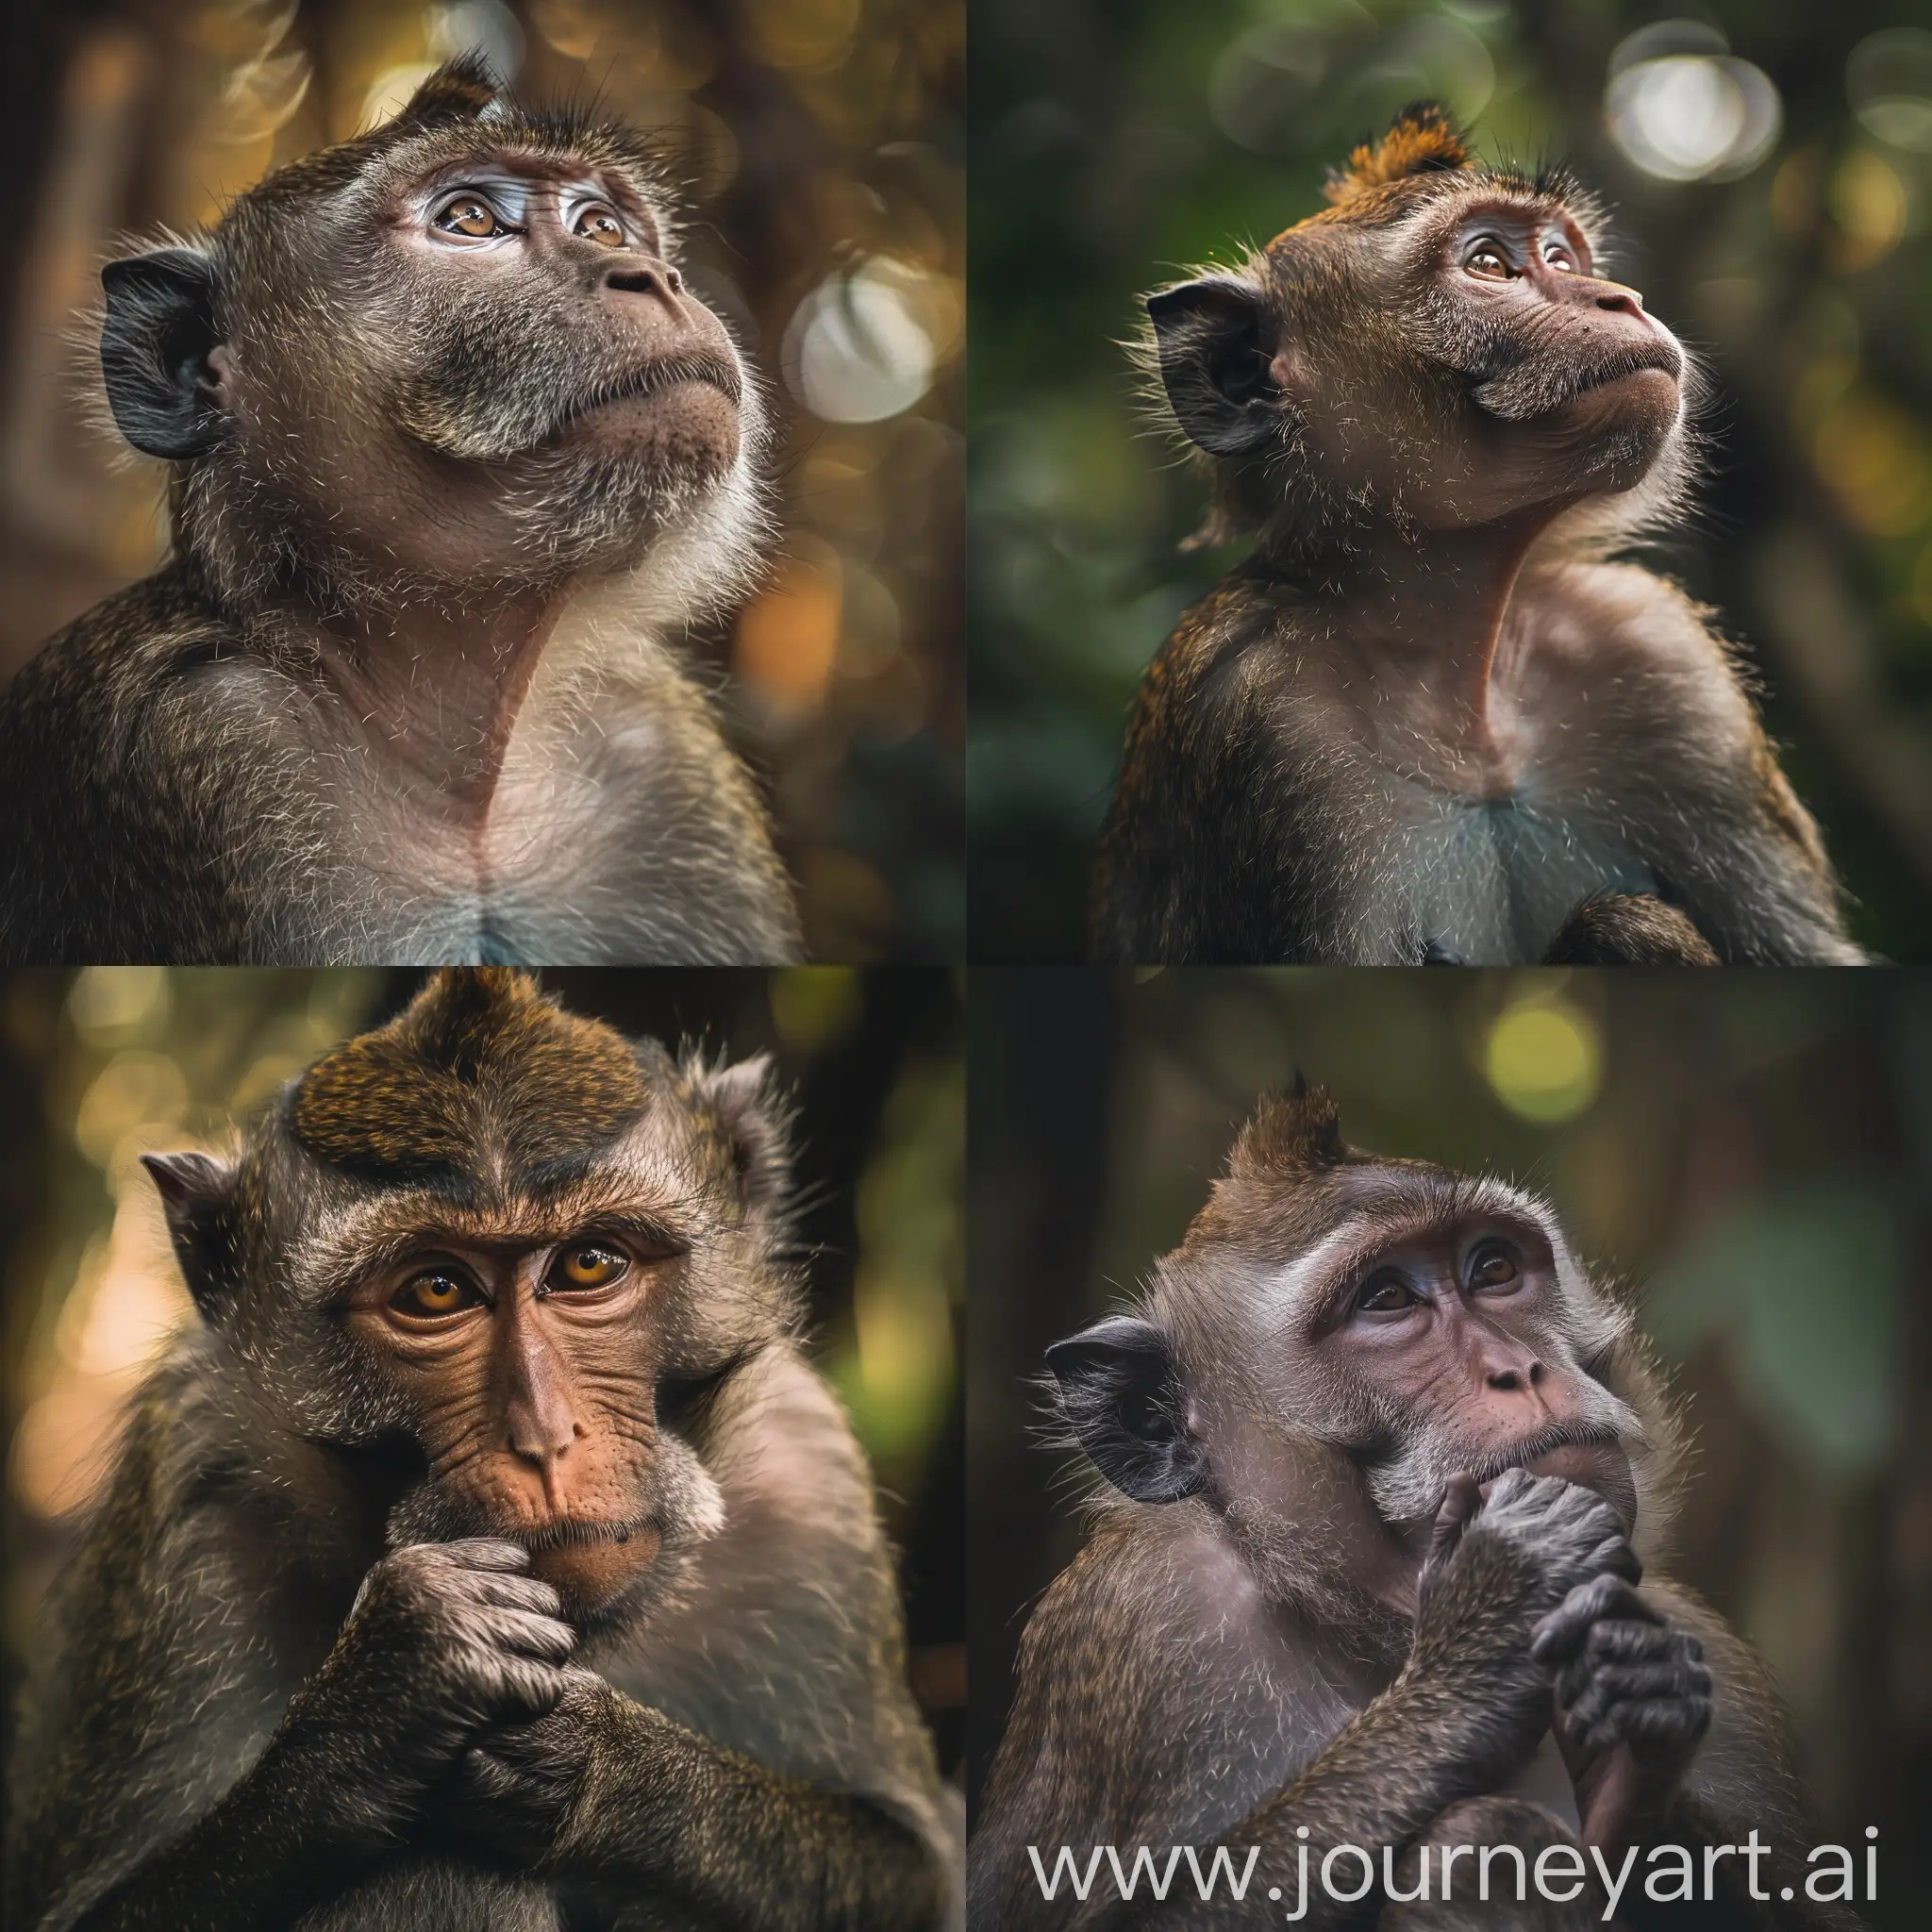 Monkey king looking at humans, 8kphoto, r..16:8, jpeg. Realistic, EOS R50 jpeg 